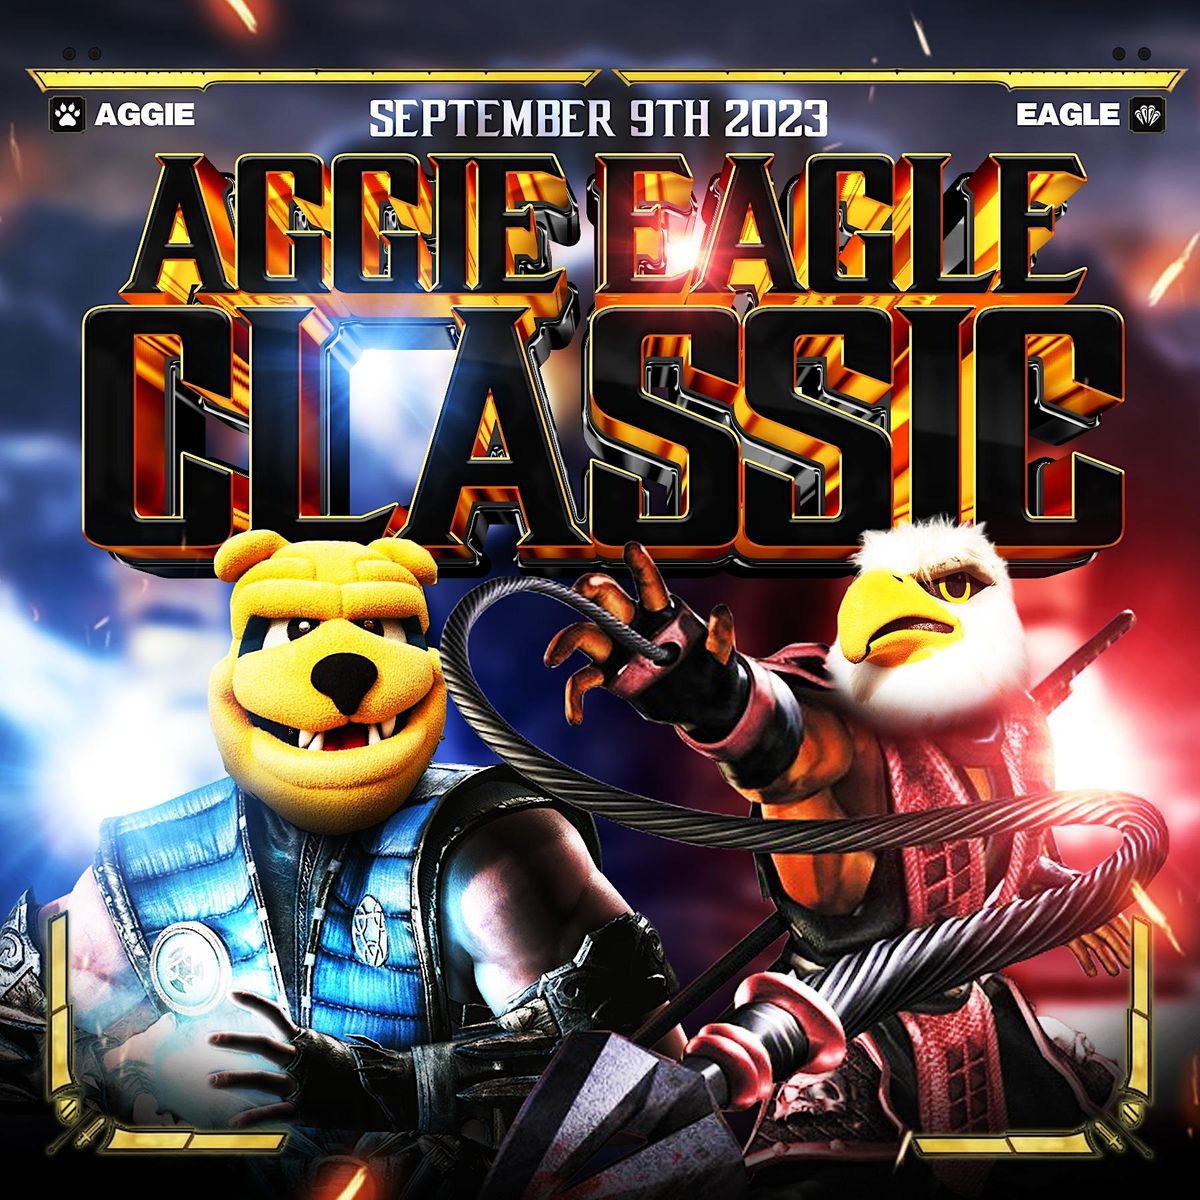 Aggie Eagle Classic 2023 North Carolina Agricultural and Technical